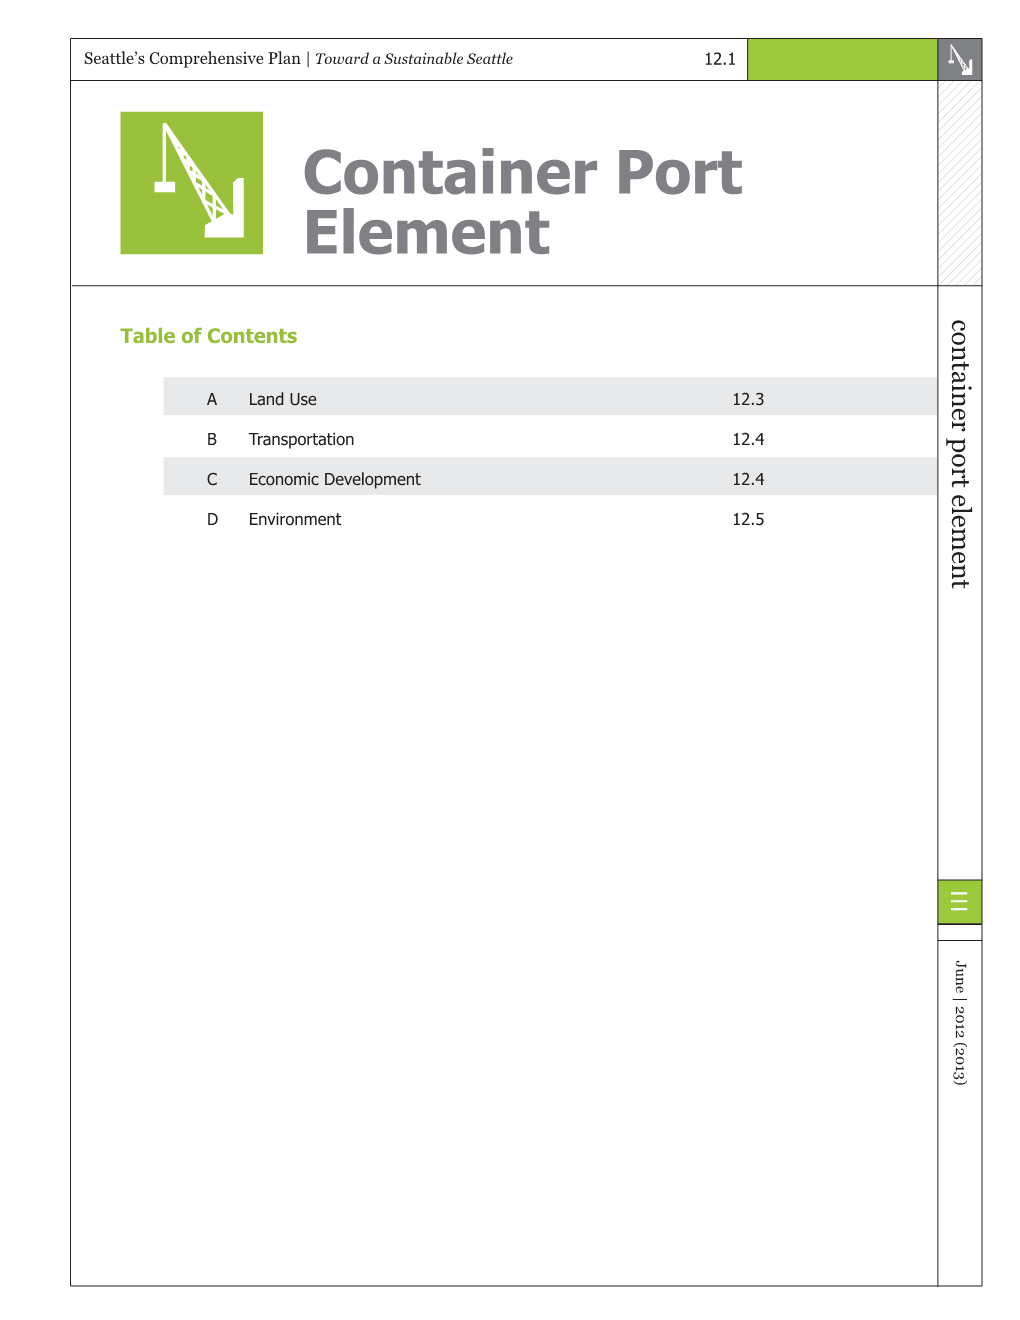 Seattle Comprehensive Plan Container Port Element